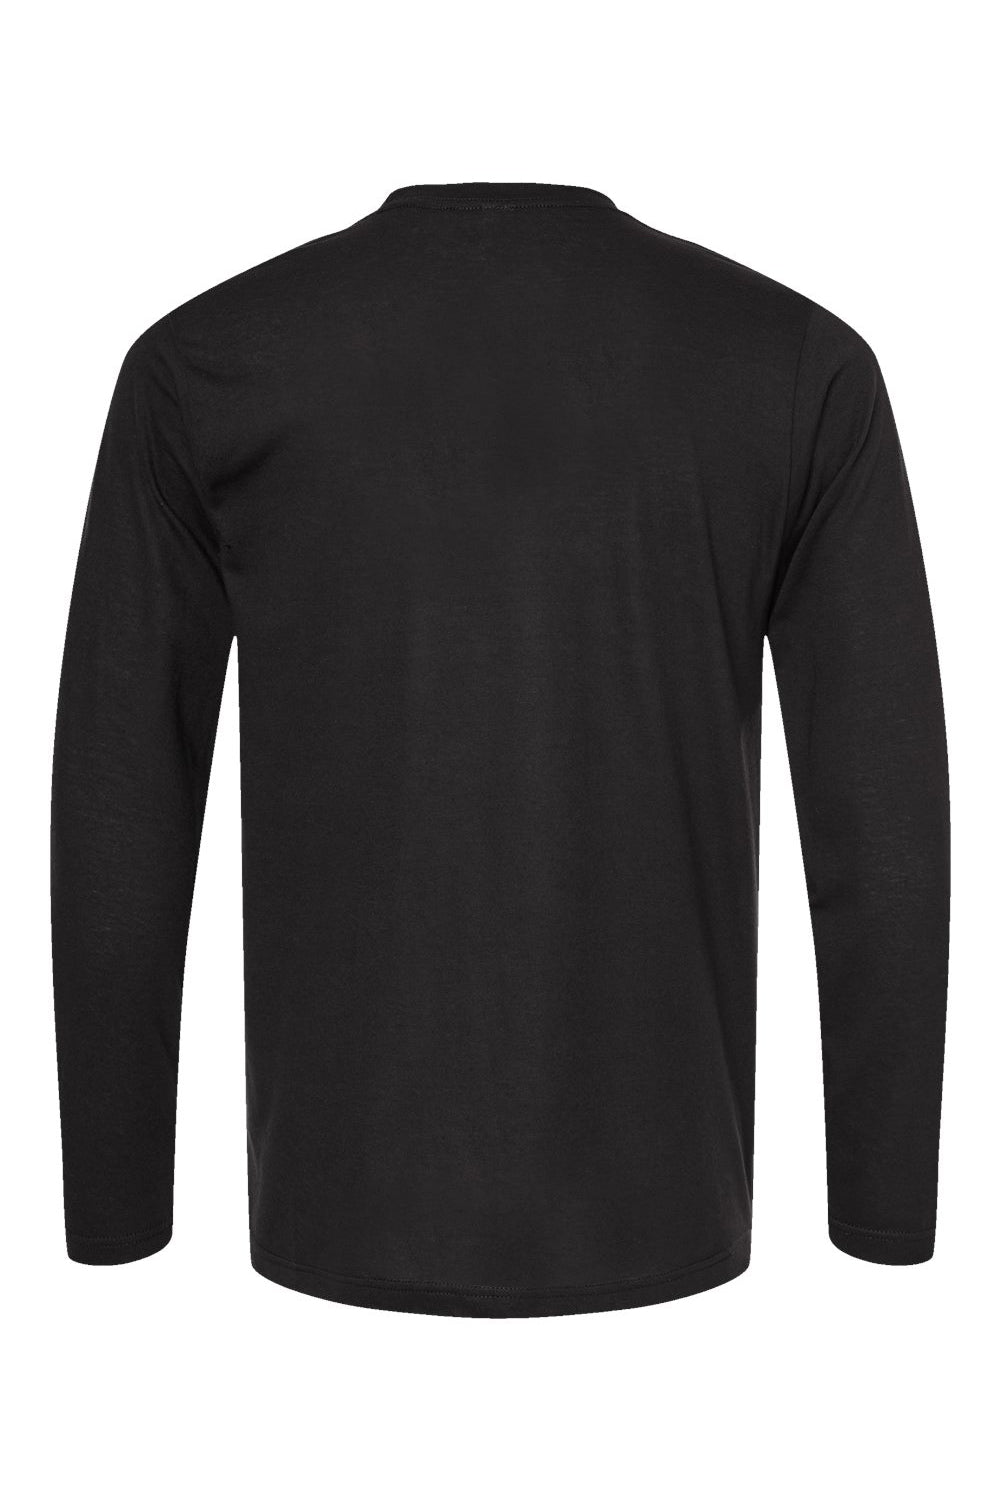 Tultex 242 Mens Poly-Rich Long Sleeve Crewneck T-Shirt Black Flat Back